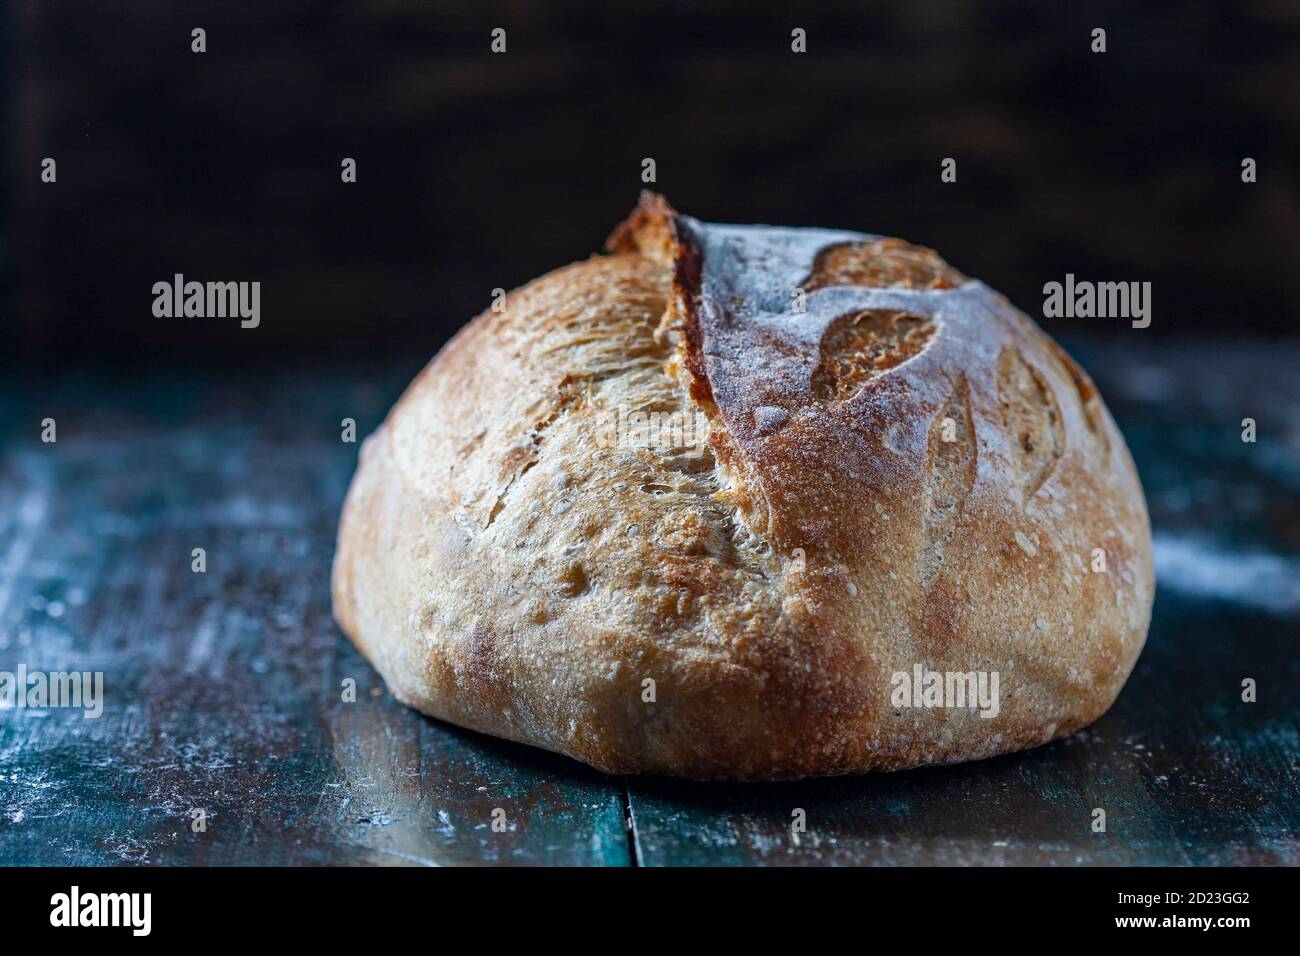 Sourdough bread. Freshly baked organic wheat bread. Stock Photo